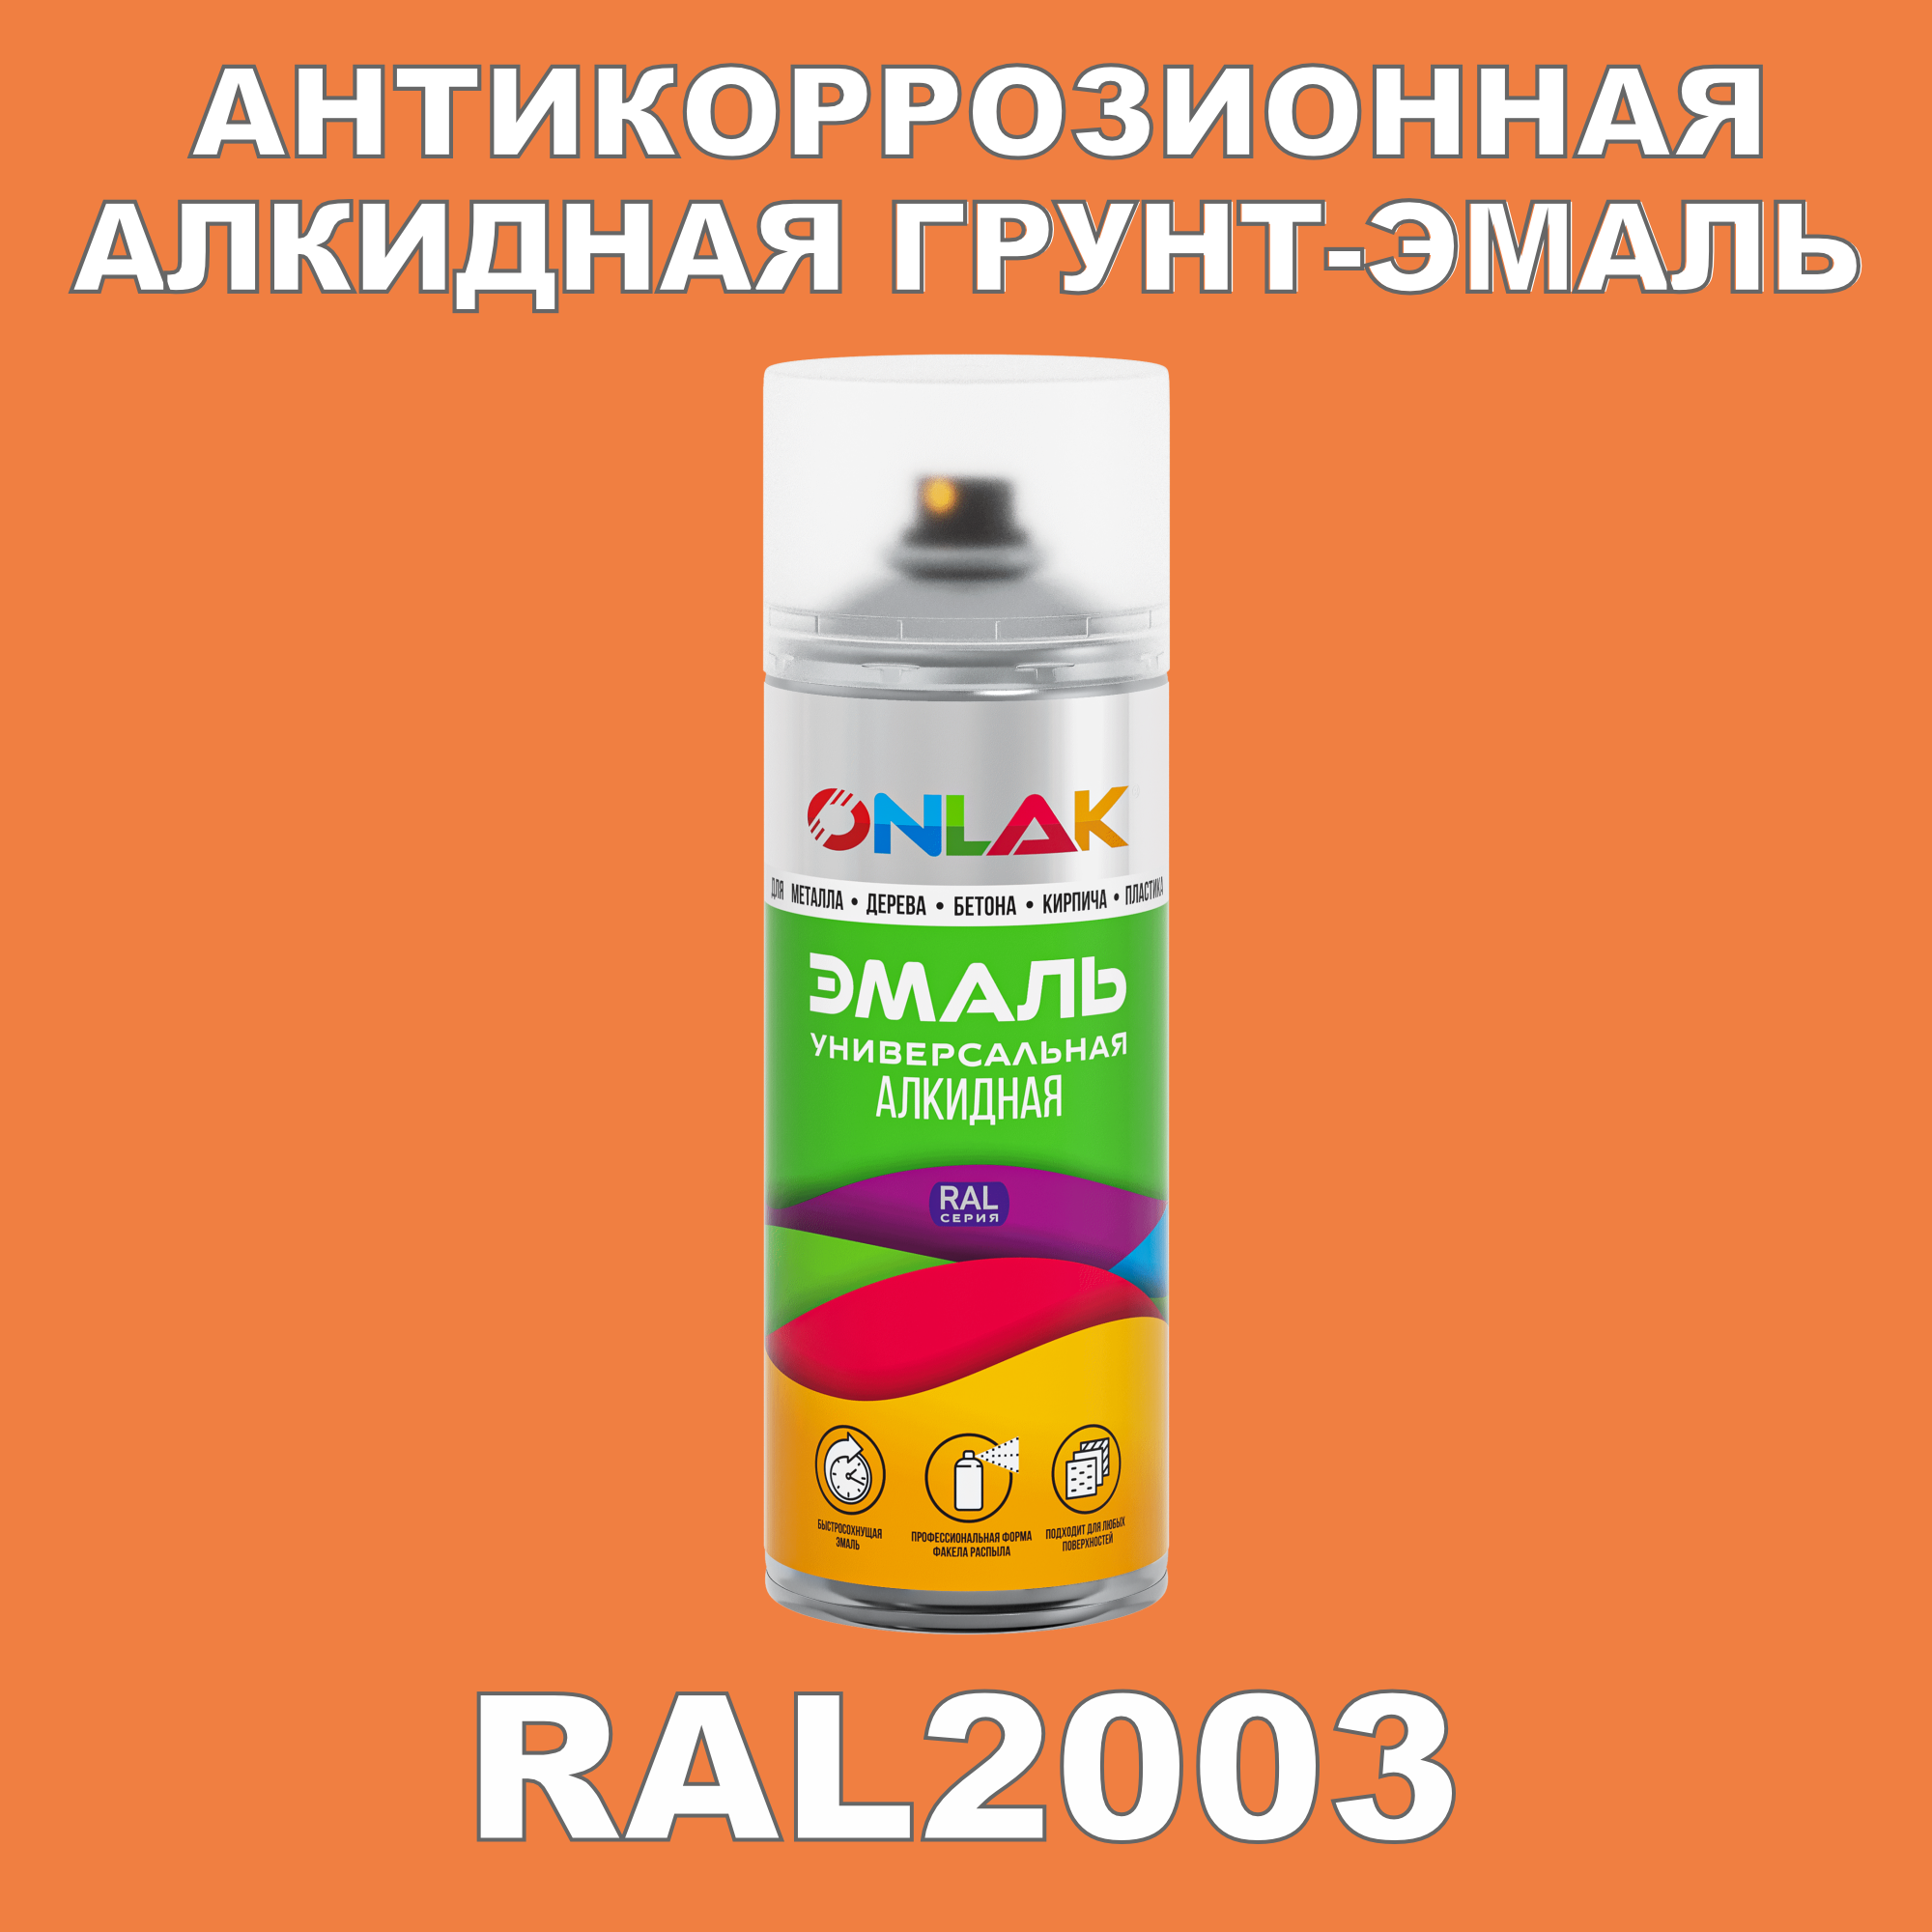 Антикоррозионная грунт-эмаль ONLAK RAL 2003,оранжевый,601 мл